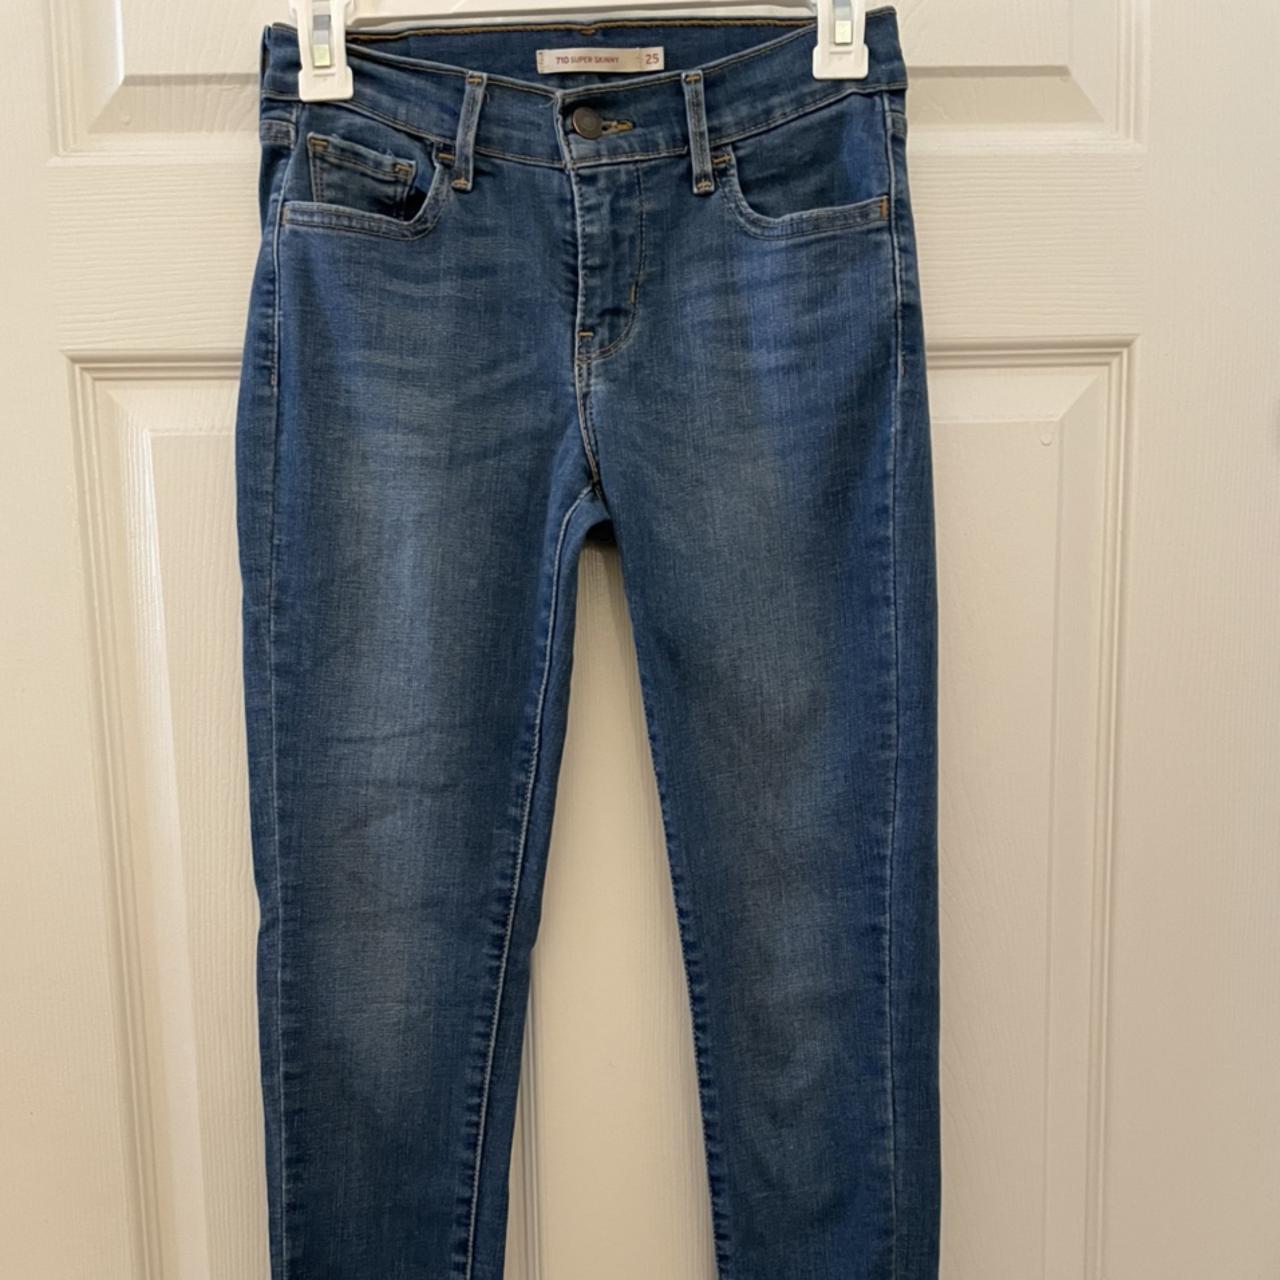 Levi’s skinny jeans #710 #levis #jeans - Depop